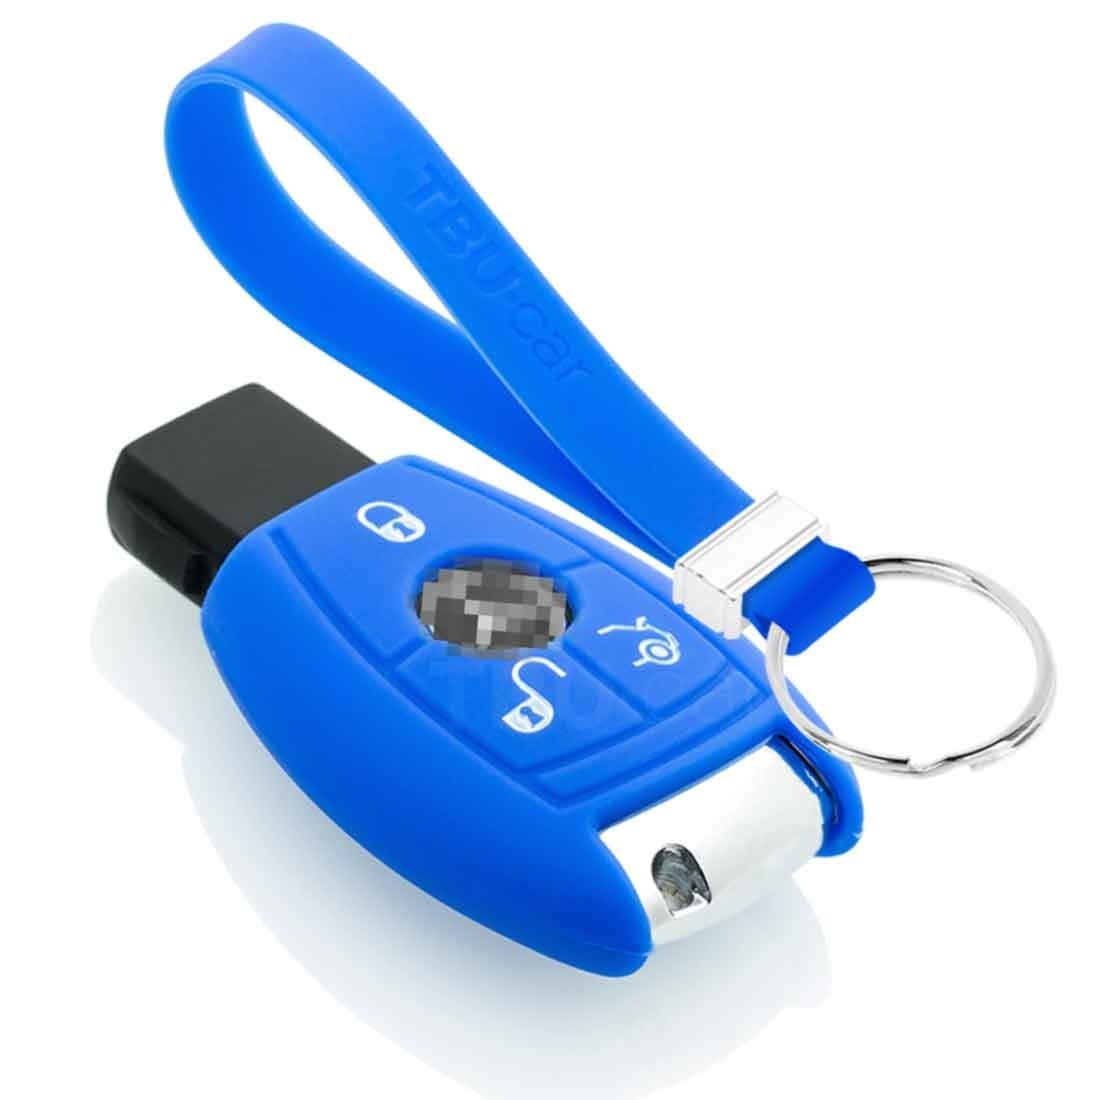 TBU car TBU car Autoschlüssel Hülle kompatibel mit Mercedes 3 Tasten - Schutzhülle aus Silikon - Auto Schlüsselhülle Cover in Blau